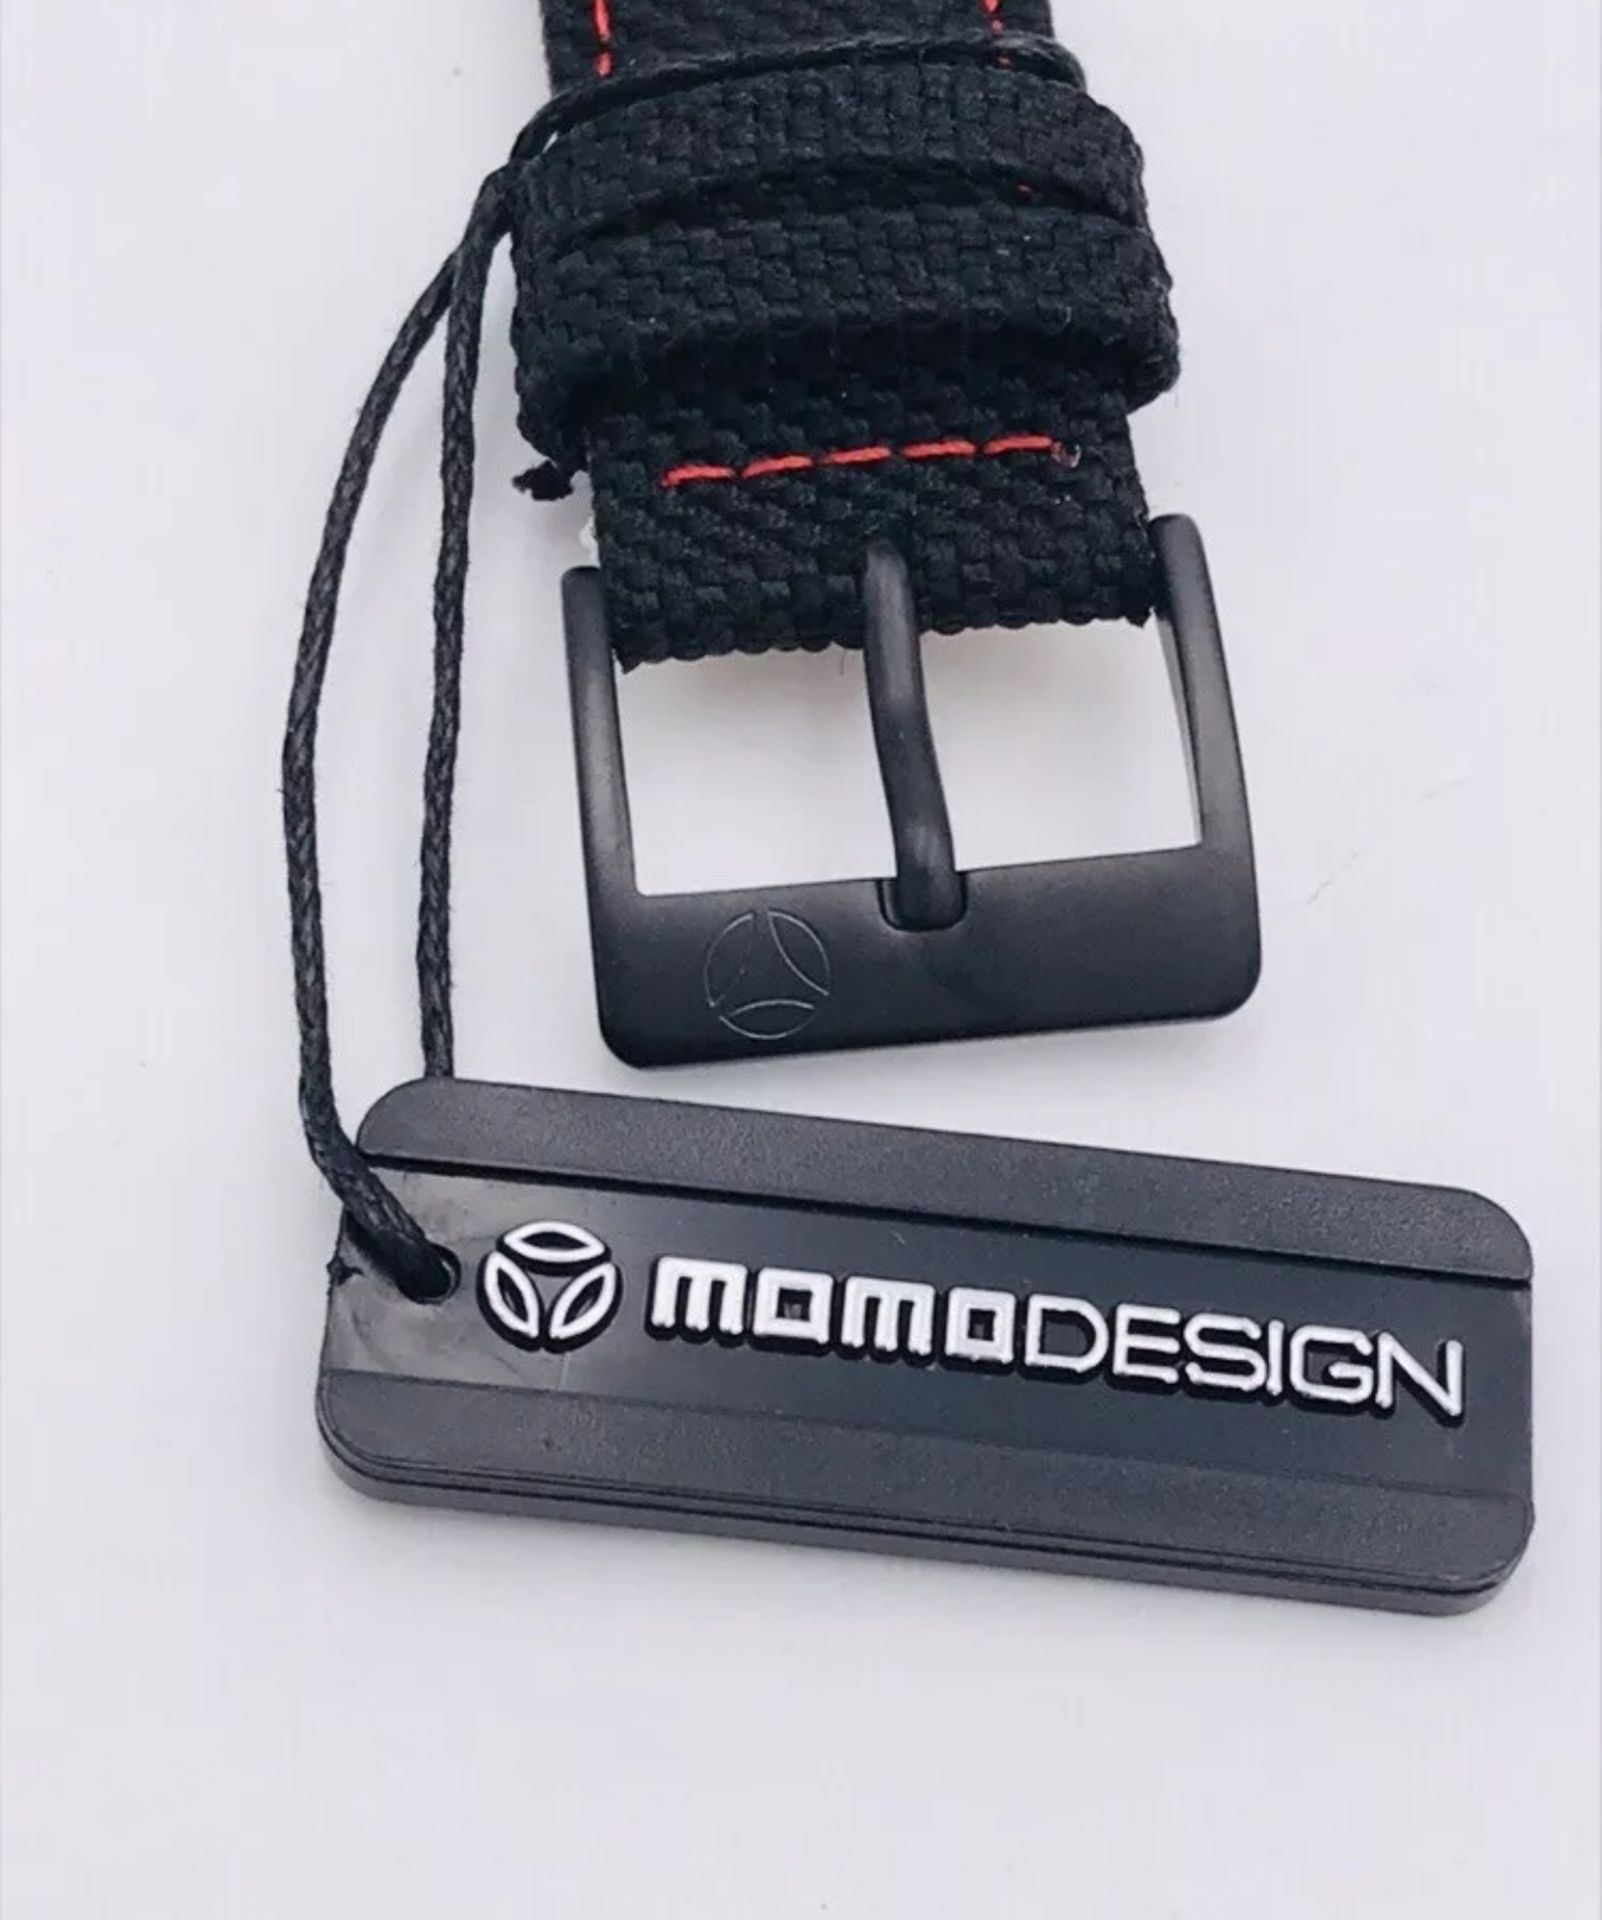 Momodesign watch - Image 8 of 9